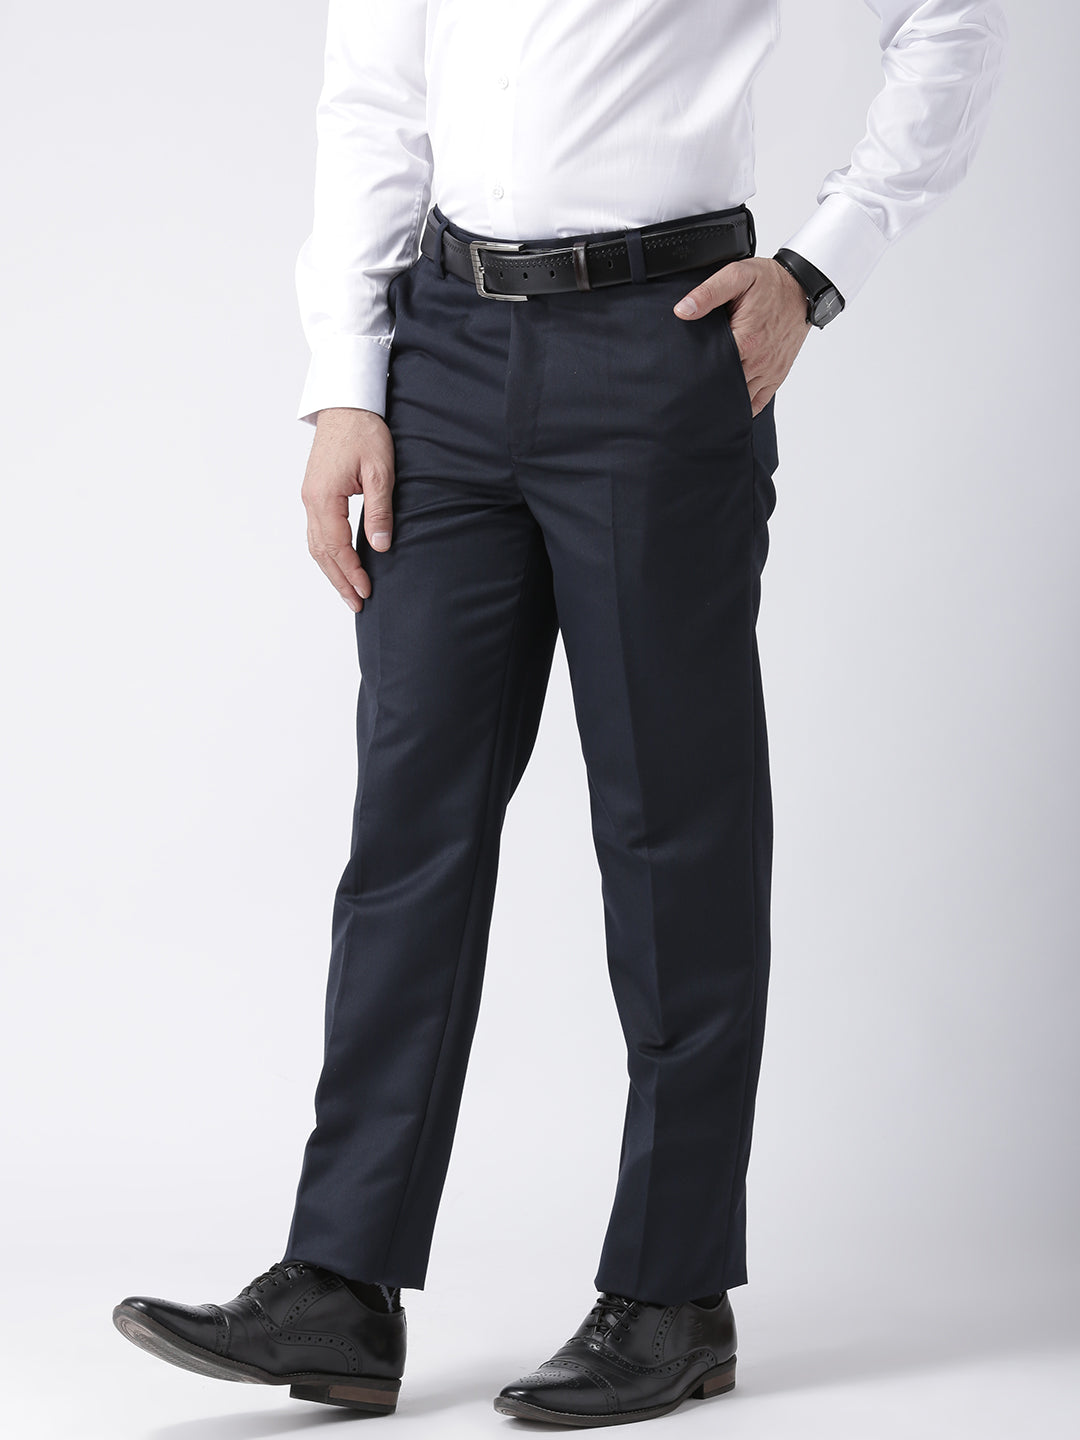 Women 2PC Formal Business Solid Color Suit Jacket Blazer Dress Pants Outfit  S-XL | eBay